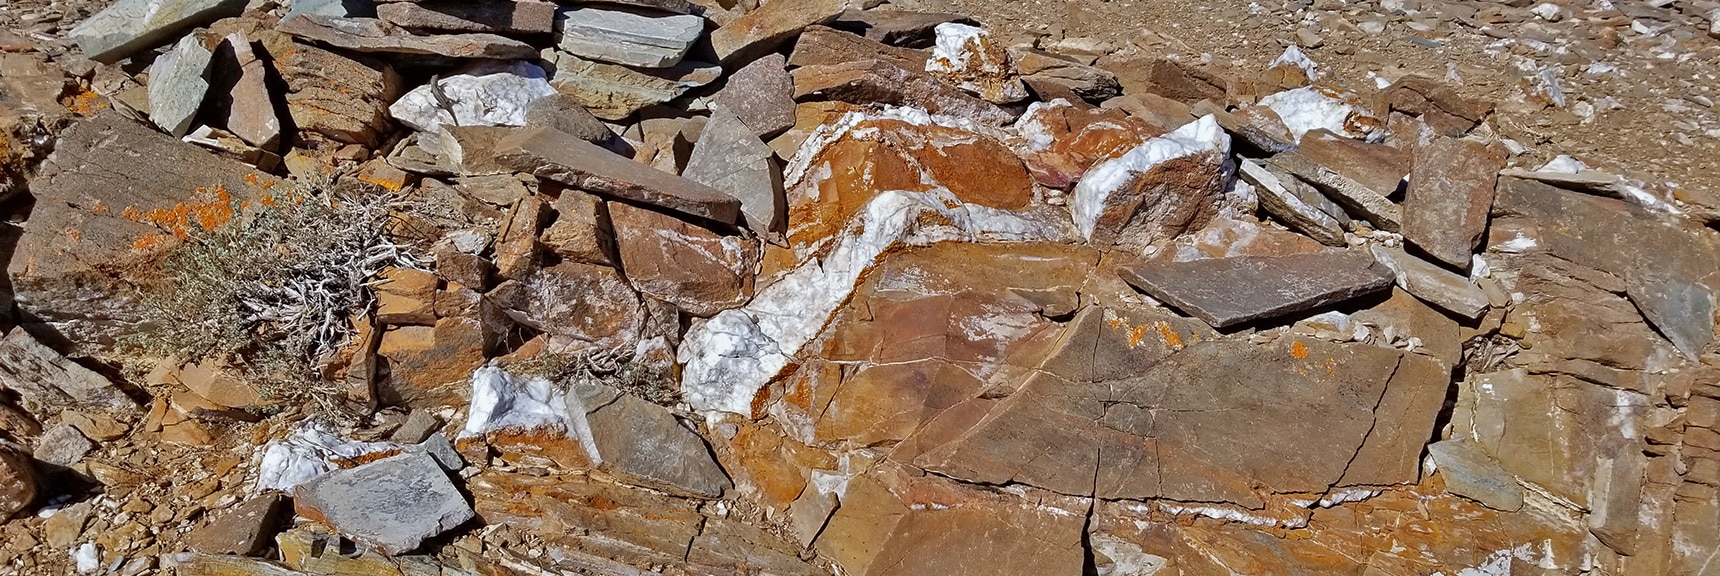 Veins of Marble on Wildrose Peak Northern Summit Area | Wildrose Peak | Panamint Mountain Range | Death Valley National Park, California